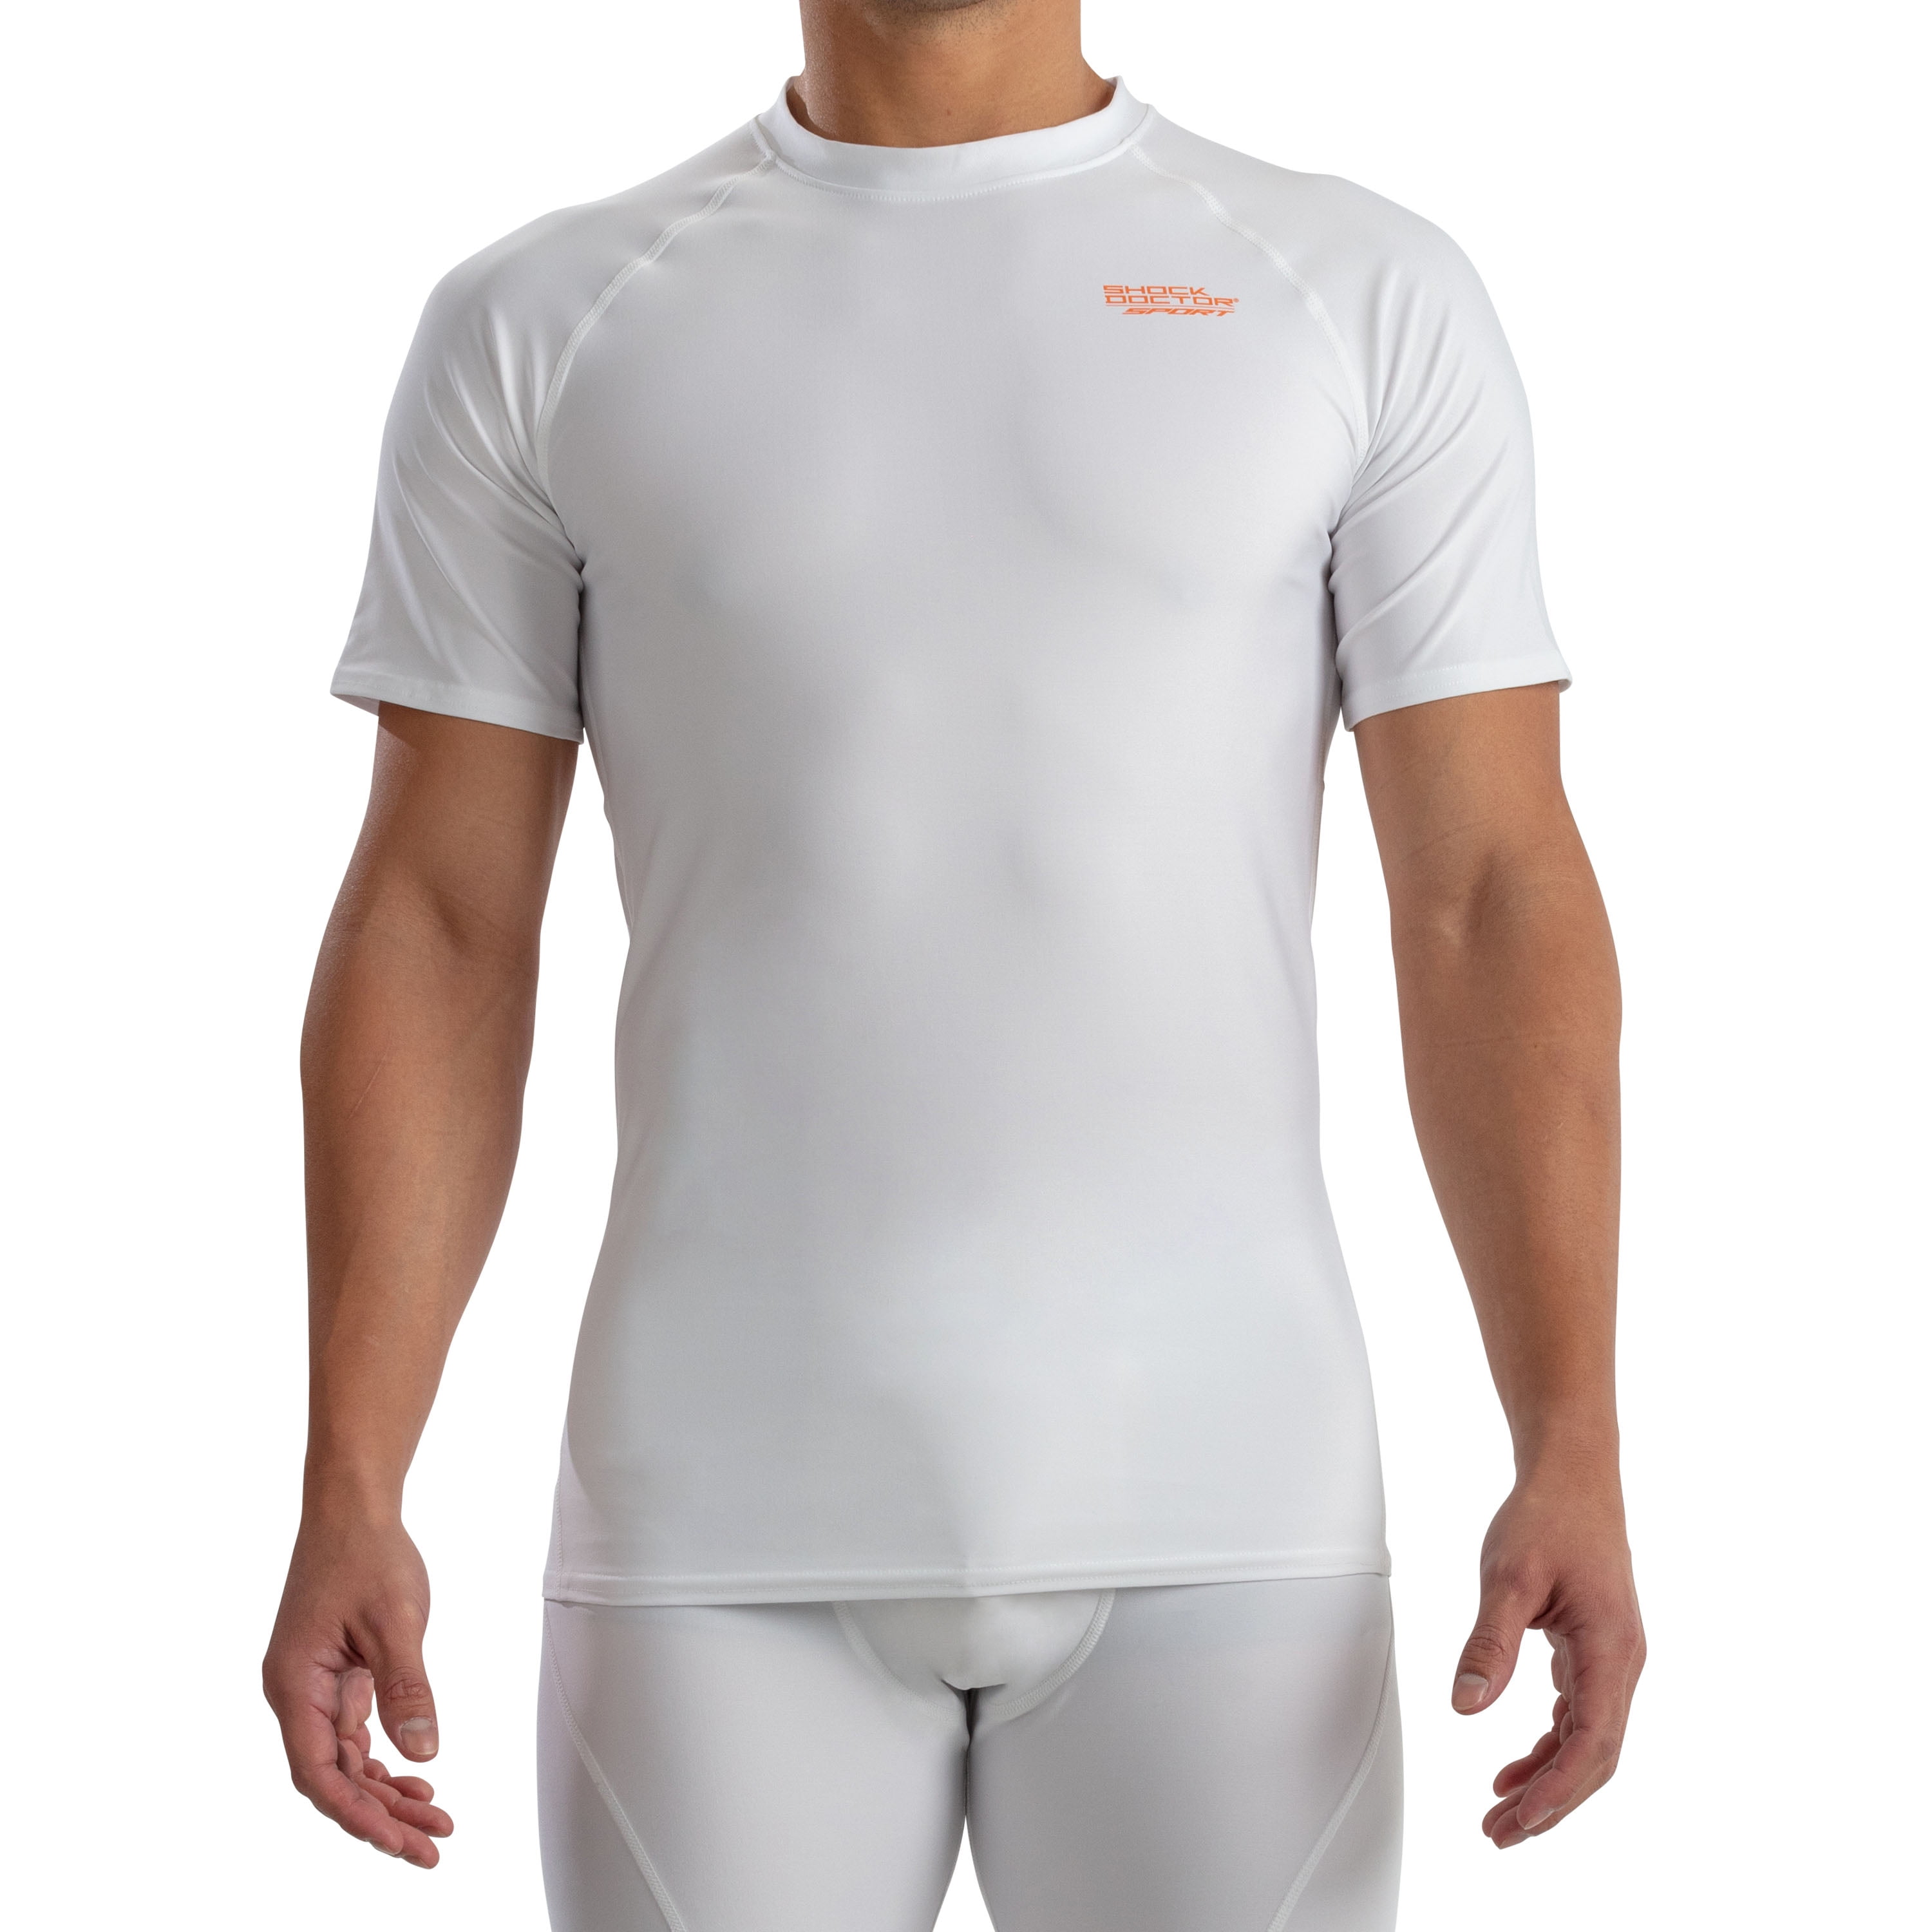 Shock Doctor Sport Short Sleeve Compression Top, White, Adult Medium